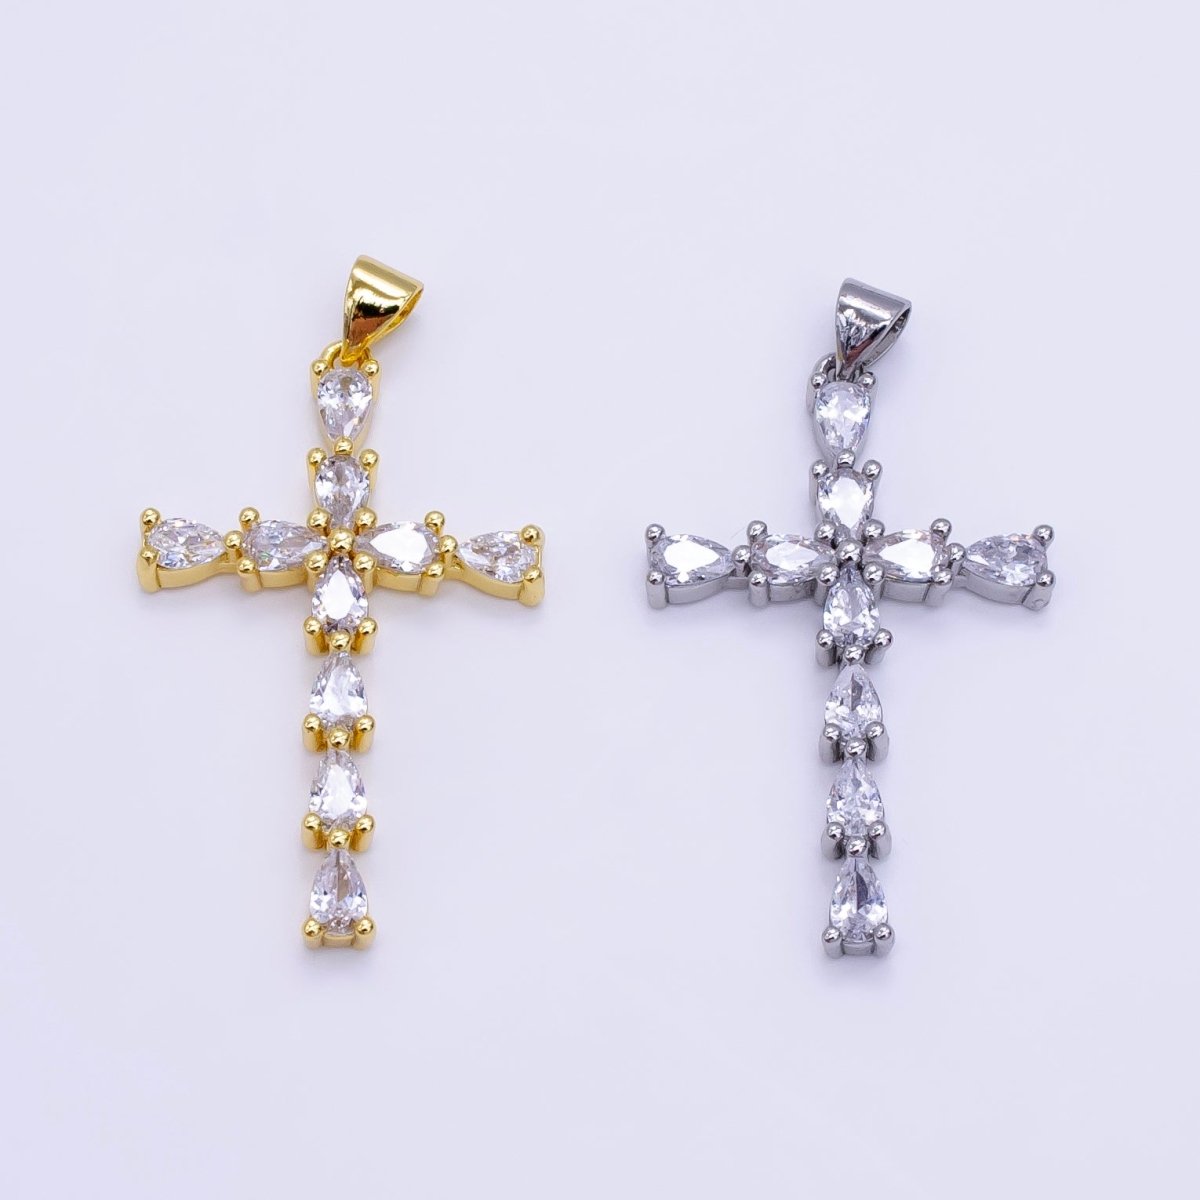 14K Gold Filled 35mm Teardrop CZ Religious Cross Pendant in Gold & Silver | H352 - DLUXCA